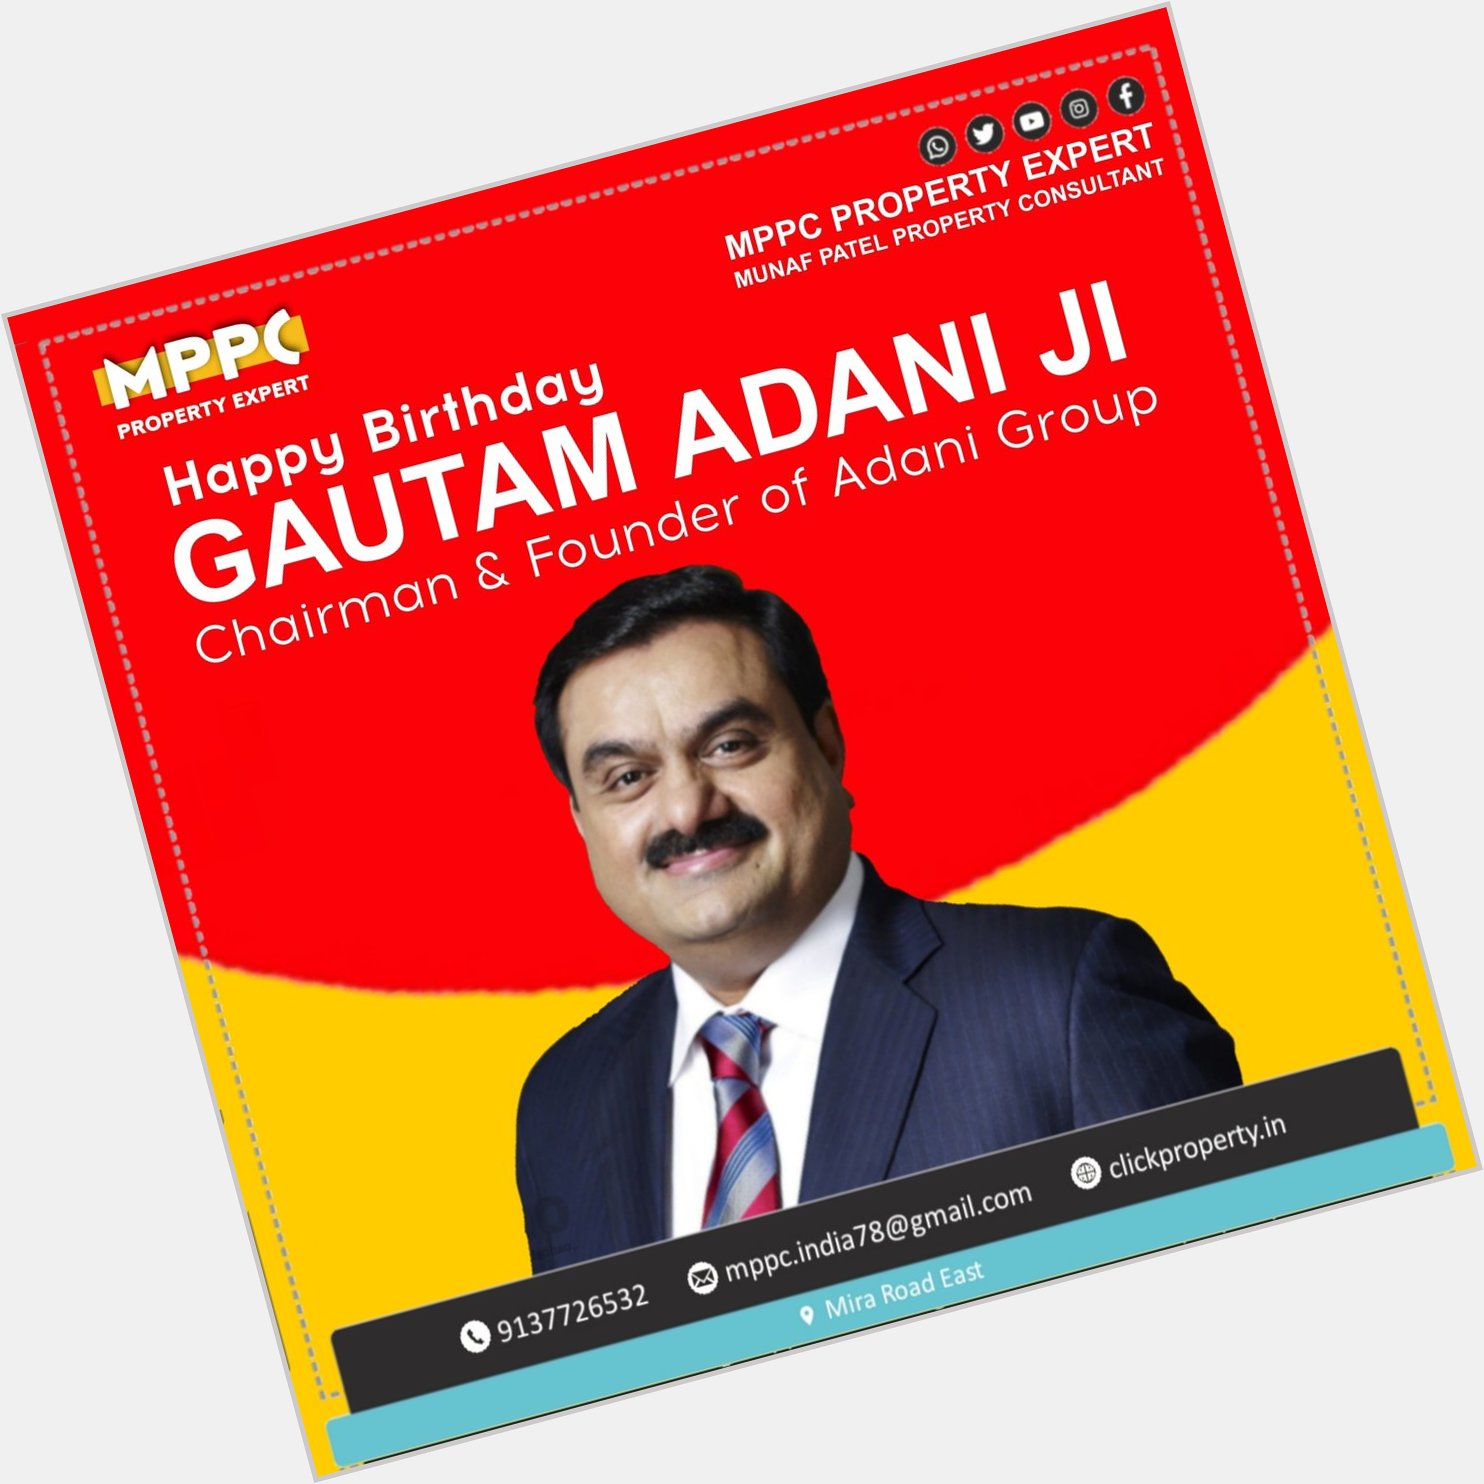 Happy Birthday
GAUTAM ADANI JI
Chairman & Founder of Adani Group
.   